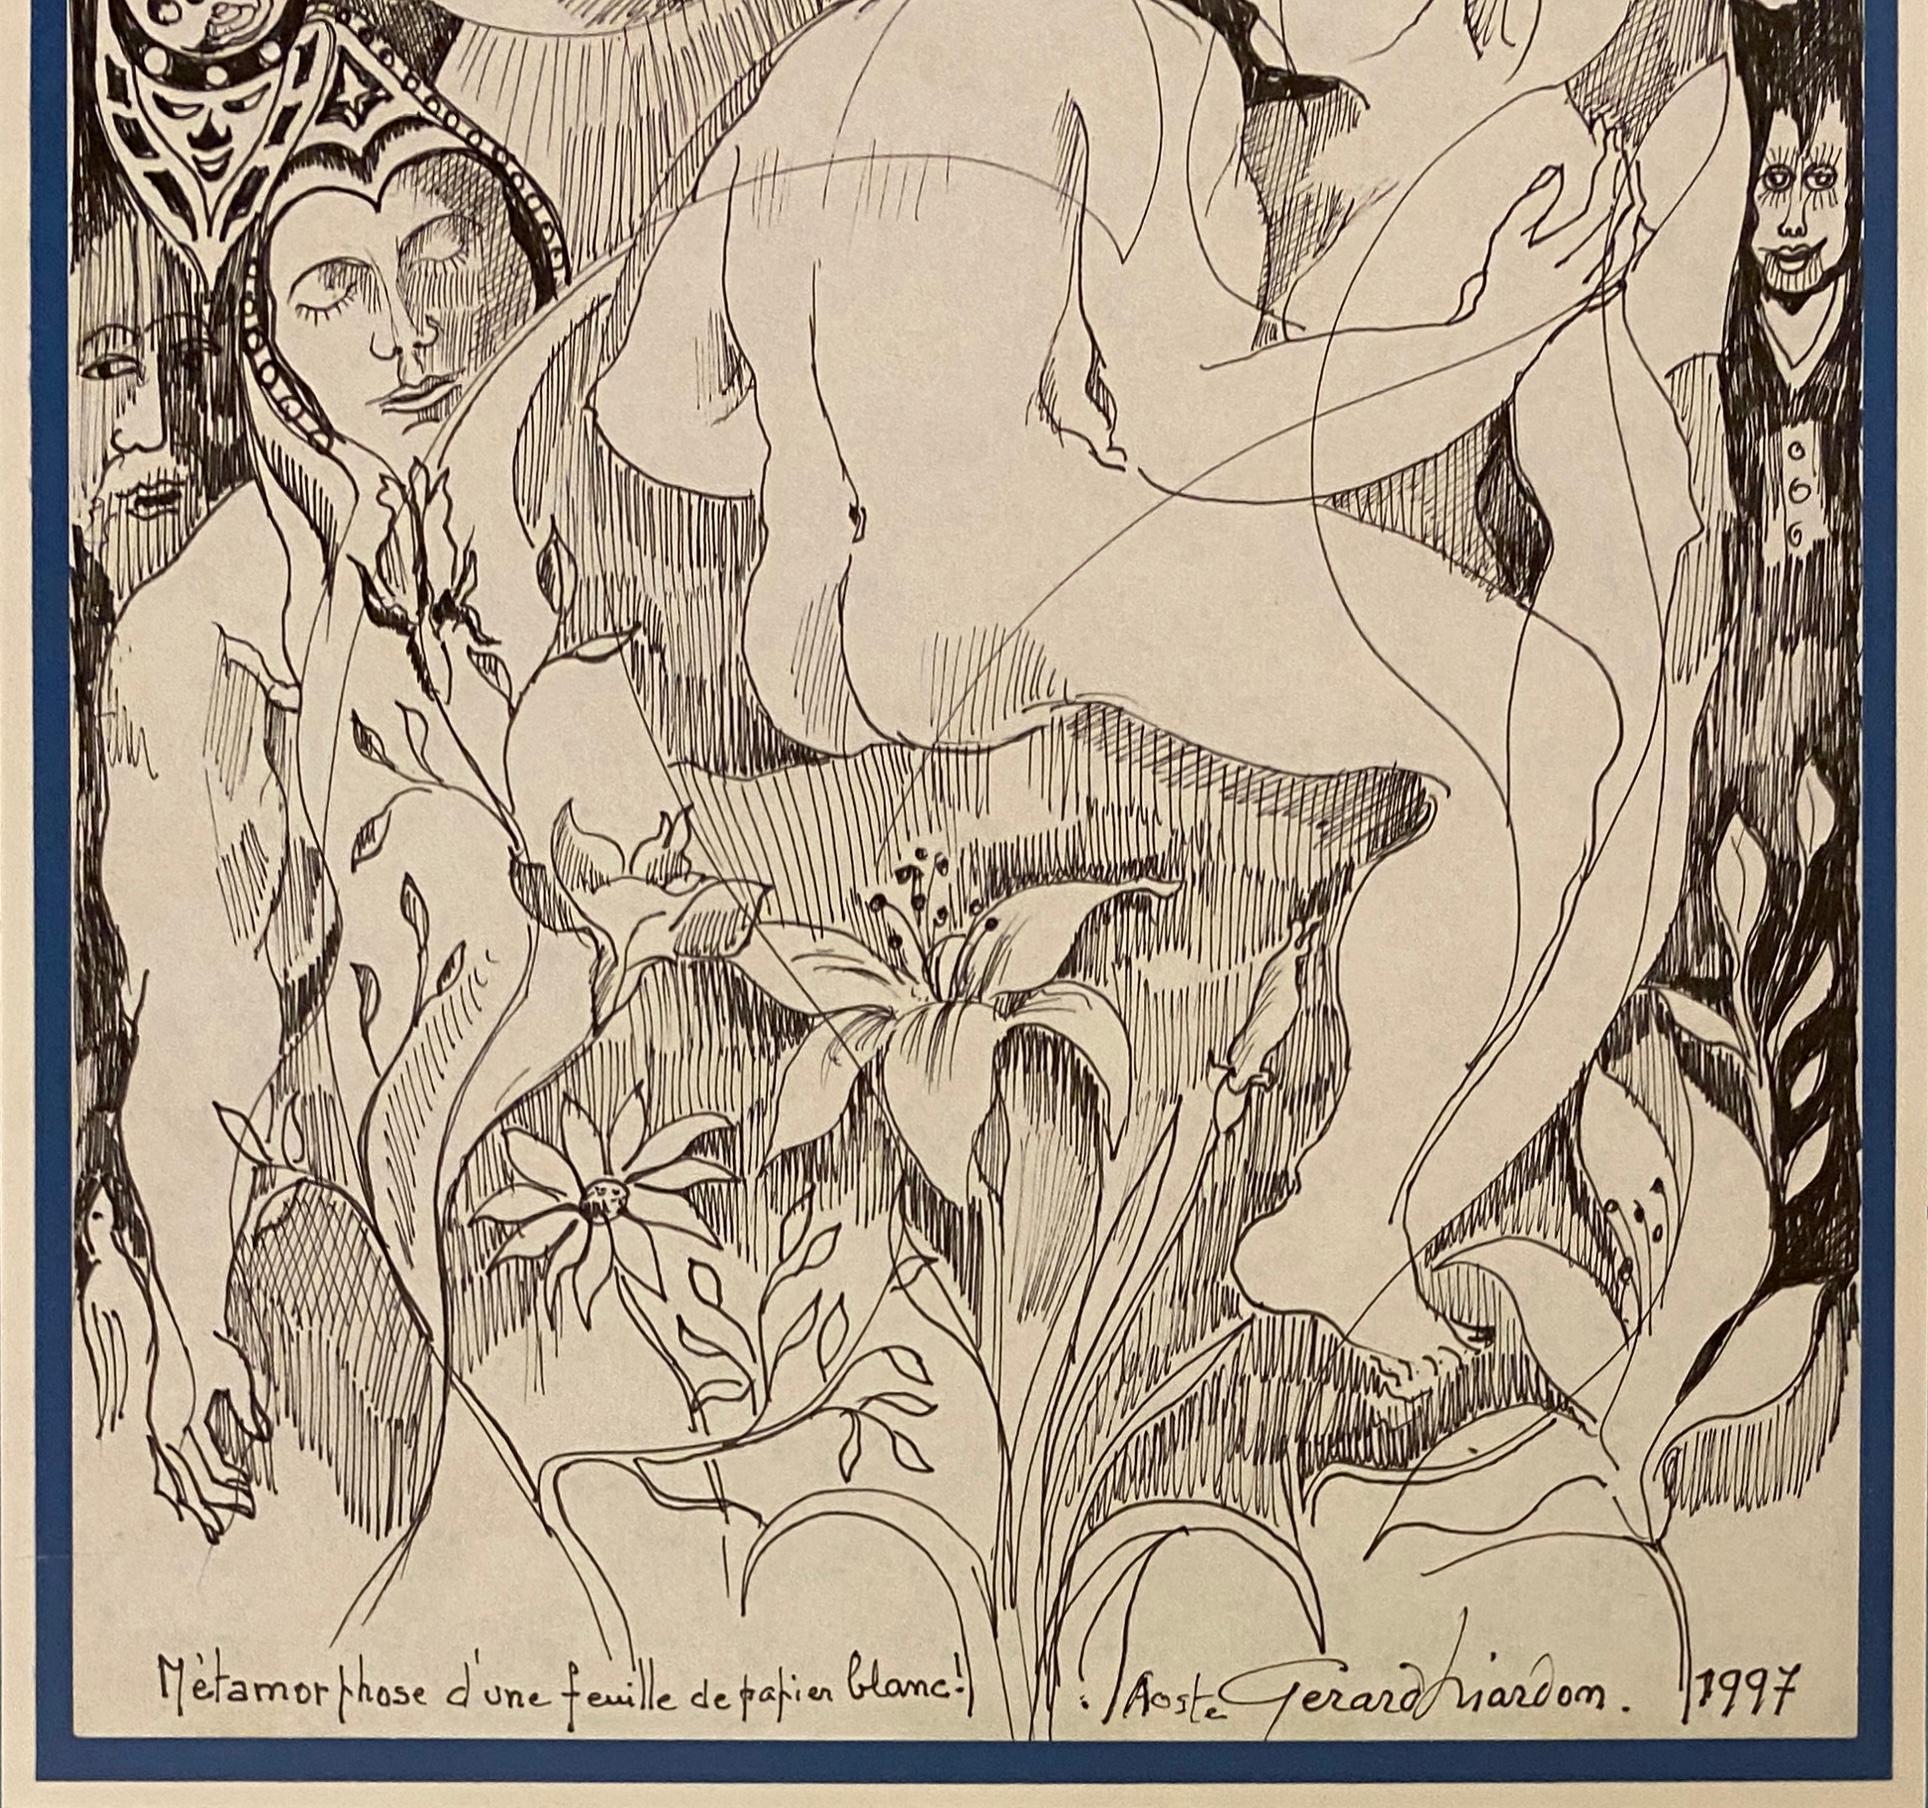 Mid-Century Modern Original Drawing of Nude Men Embracing by Gerard Mardon  For Sale